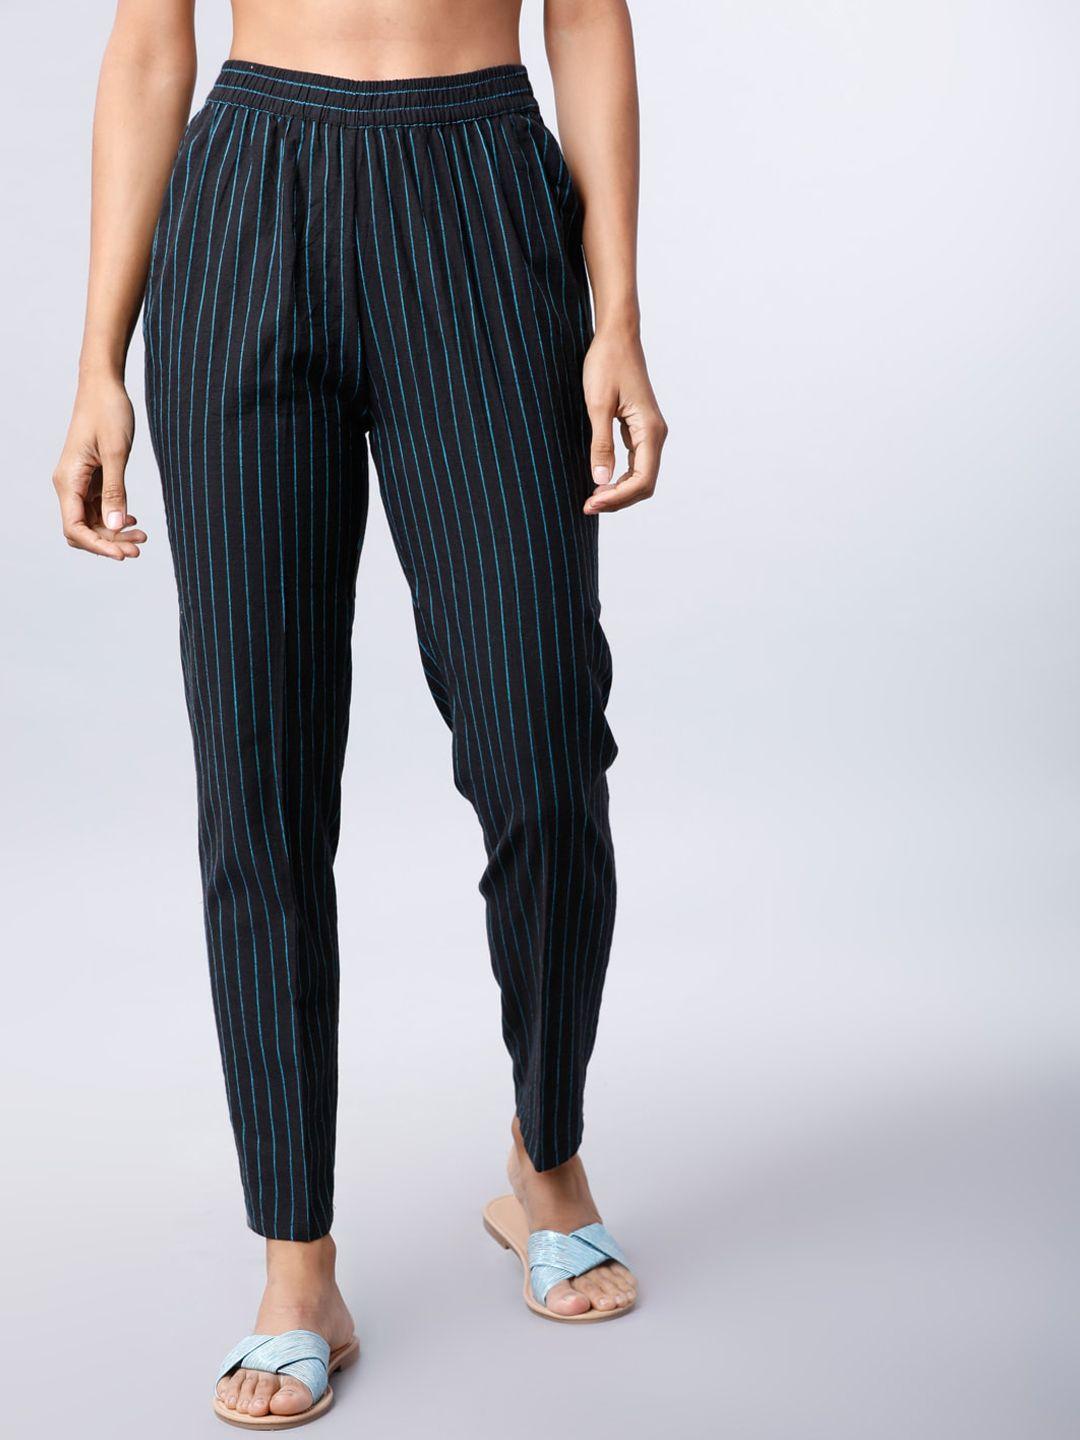 vishudh-women-black-slim-fit-striped-regular-trousers